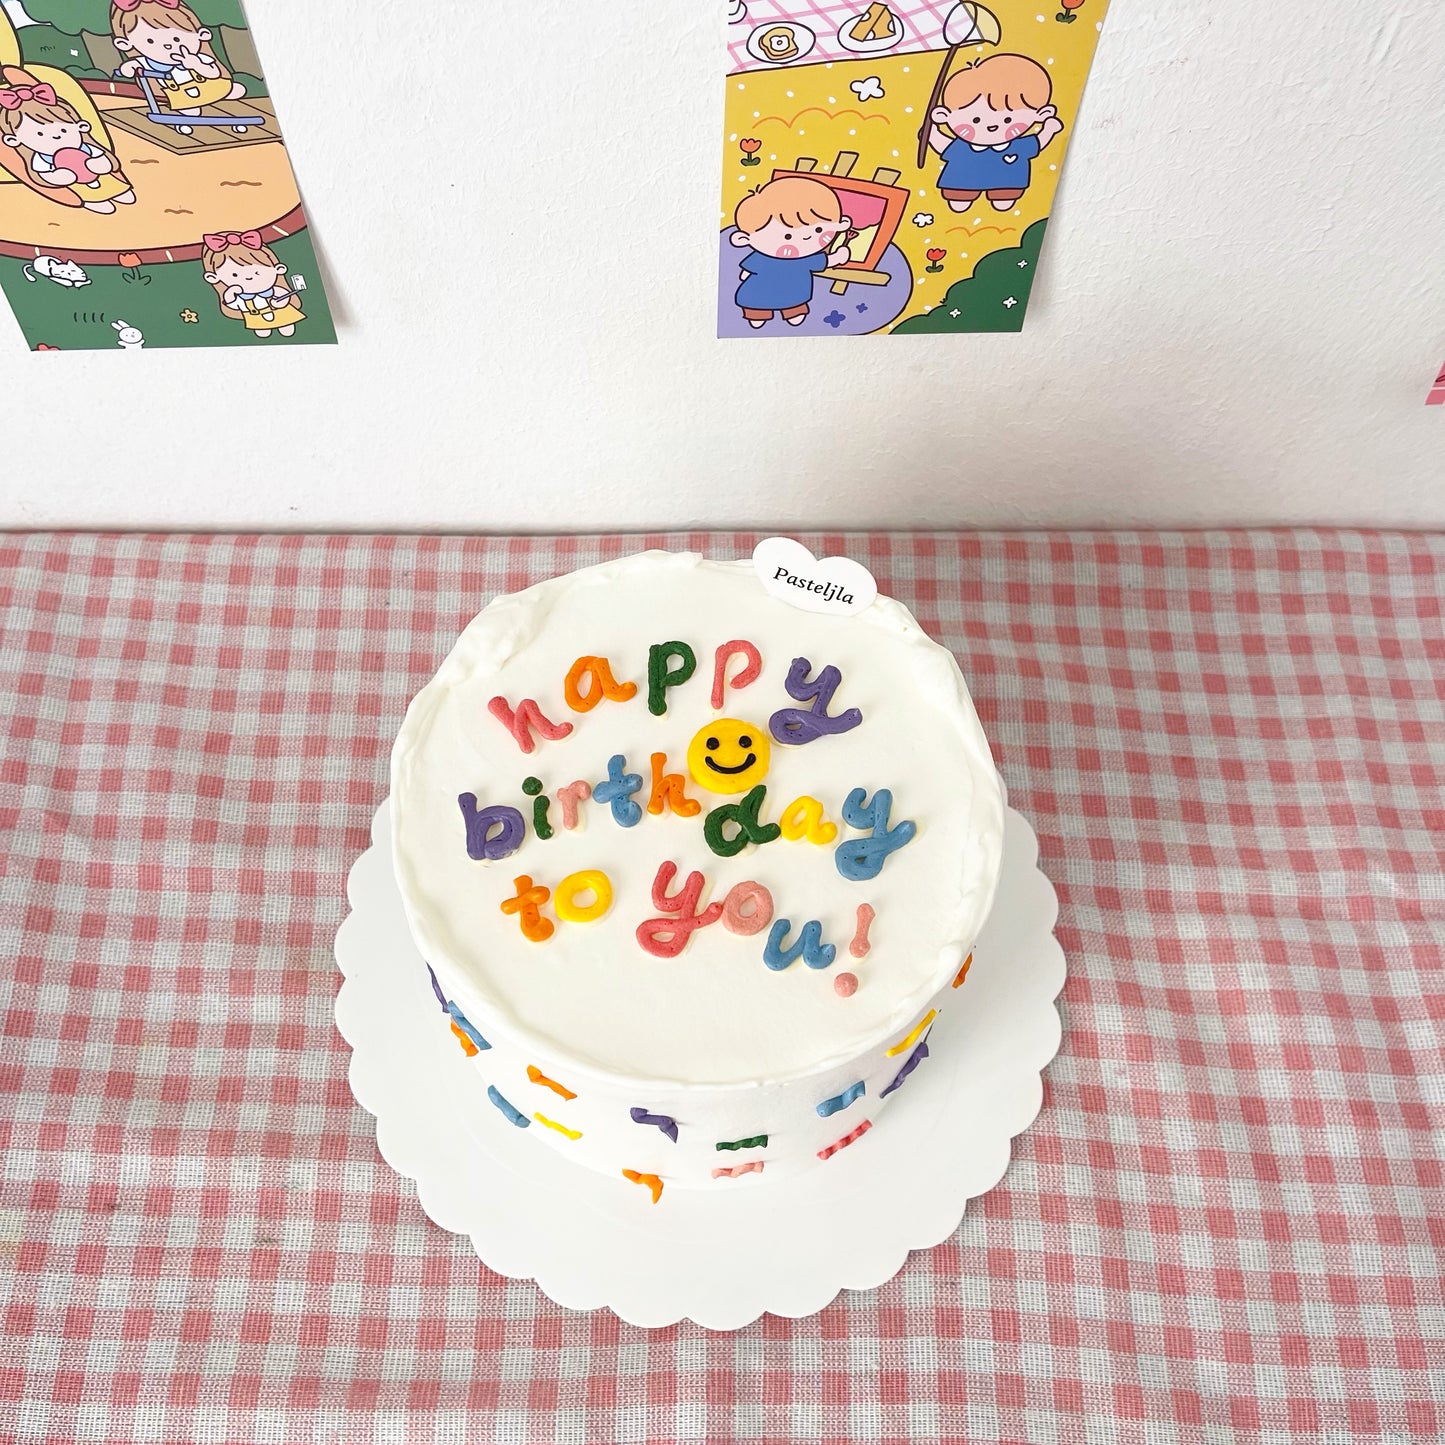 Colorful happy birthday cake